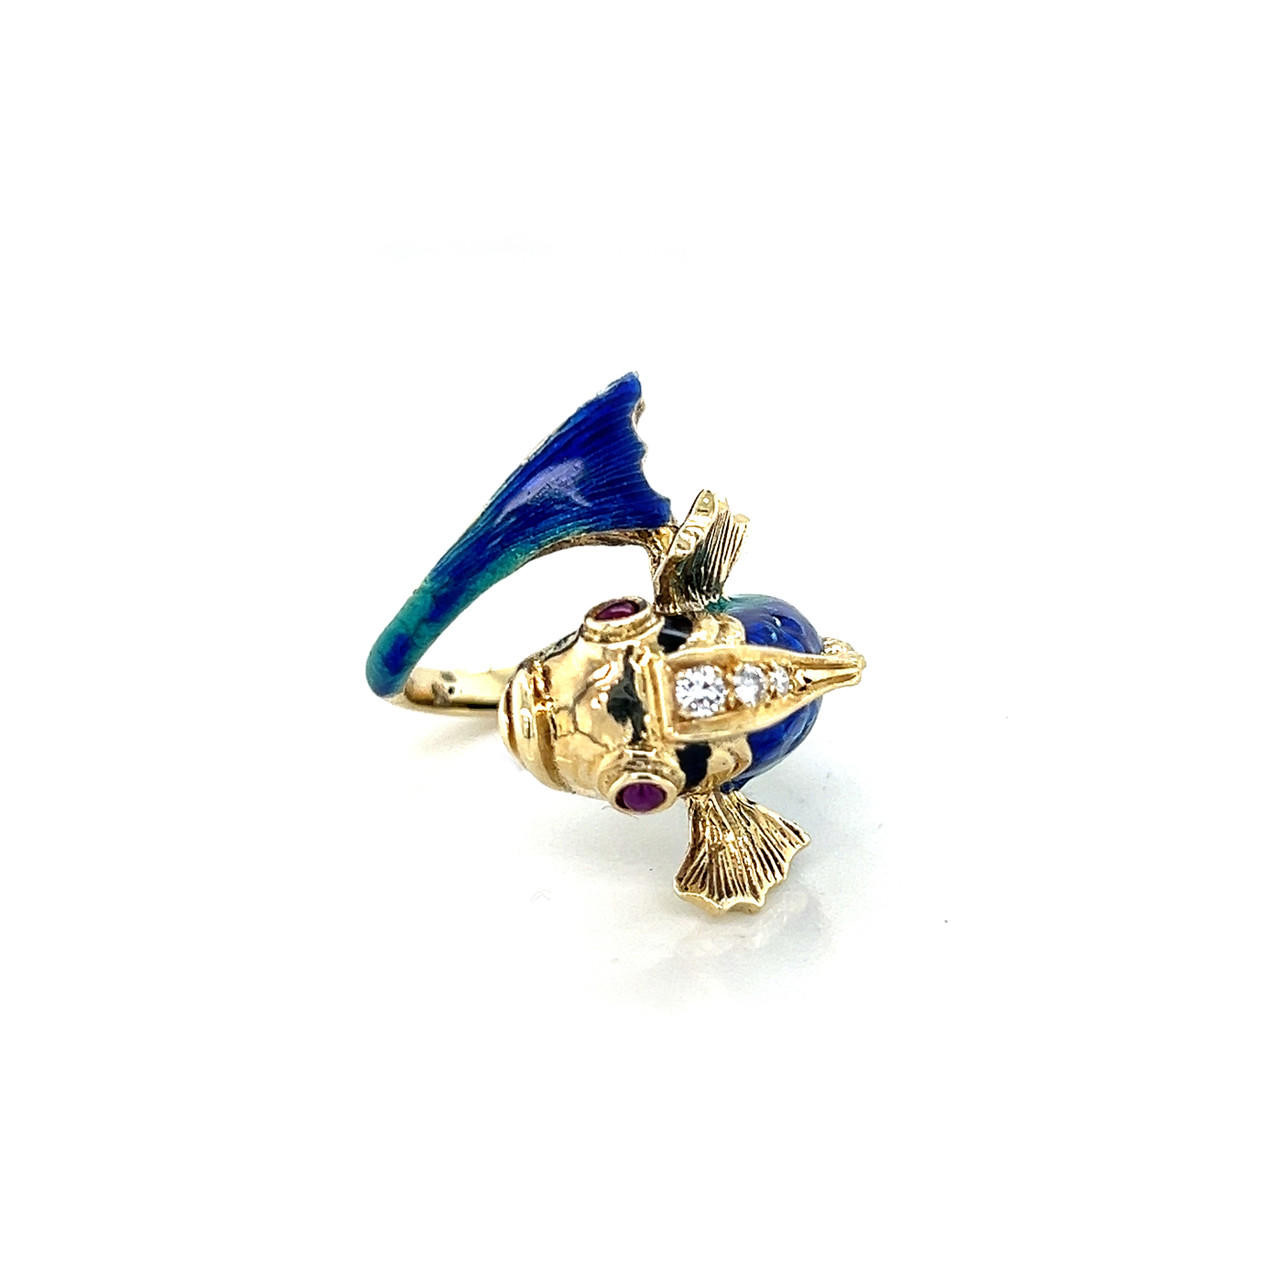 three sisters jewelry design vintage enamel koi fish ring 52221.1701243859